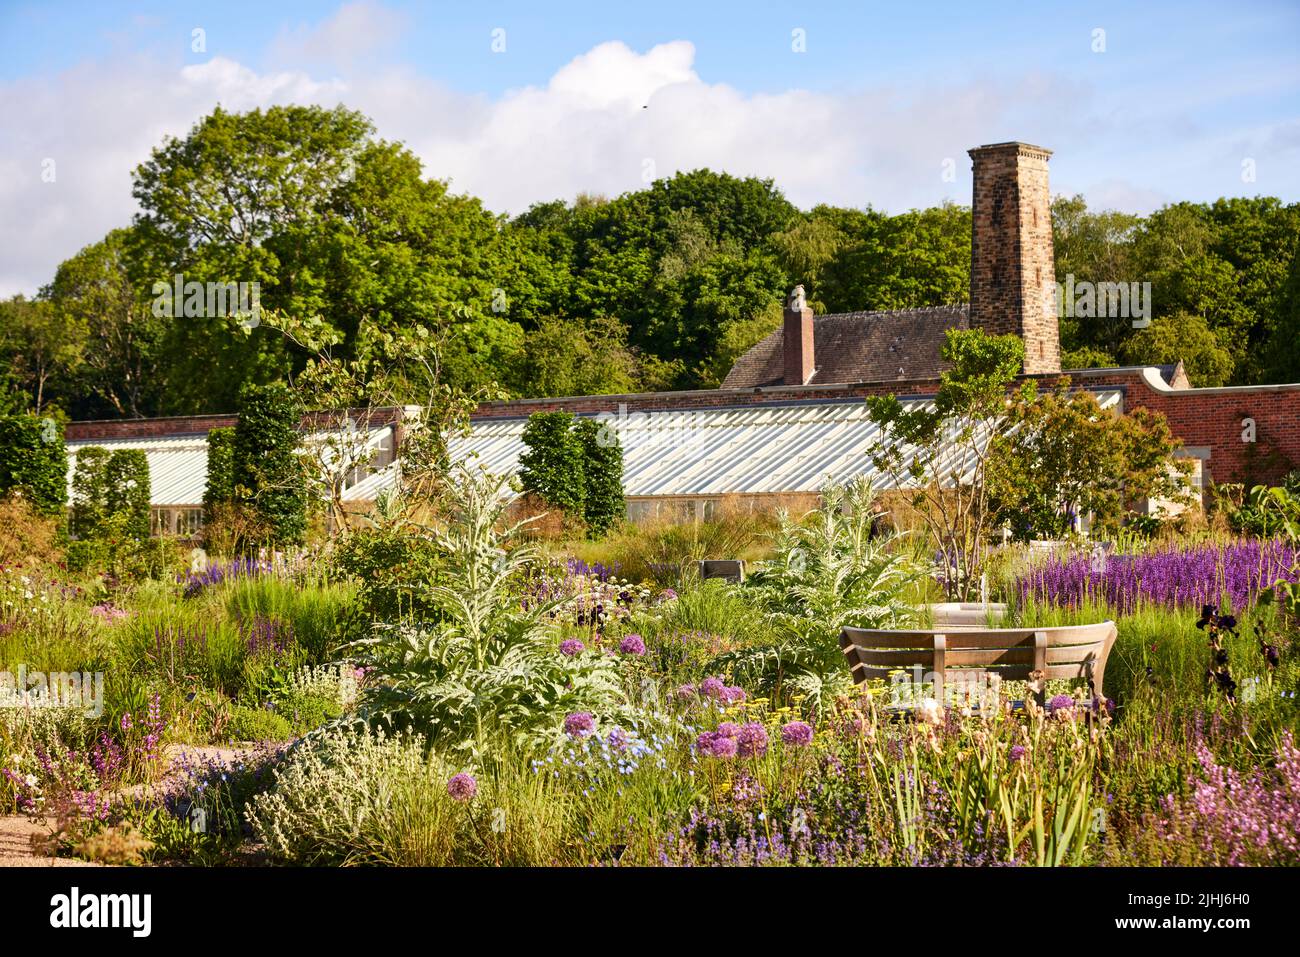 RHS Bridgewater in Worsley, Salford. greenhouses in The Paradise Garden Stock Photo